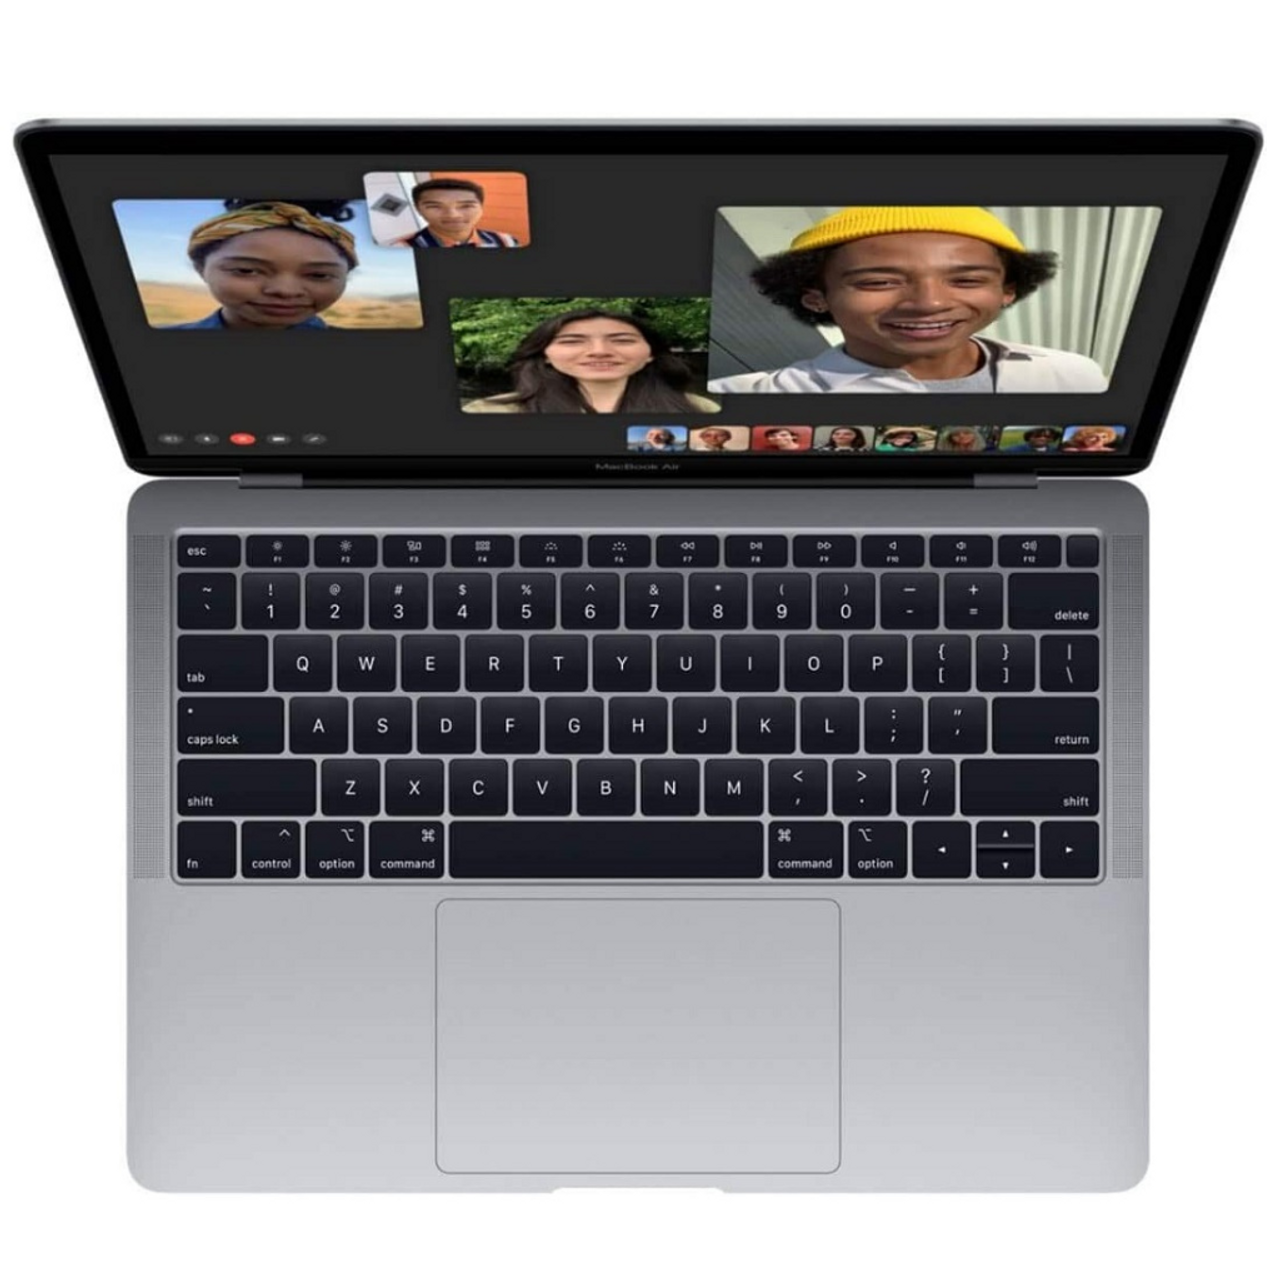 Apple® MacBook Air 13.3-Inch Retina Touch ID, Intel Core i5, 8GB RAM, 128GB SSD product image